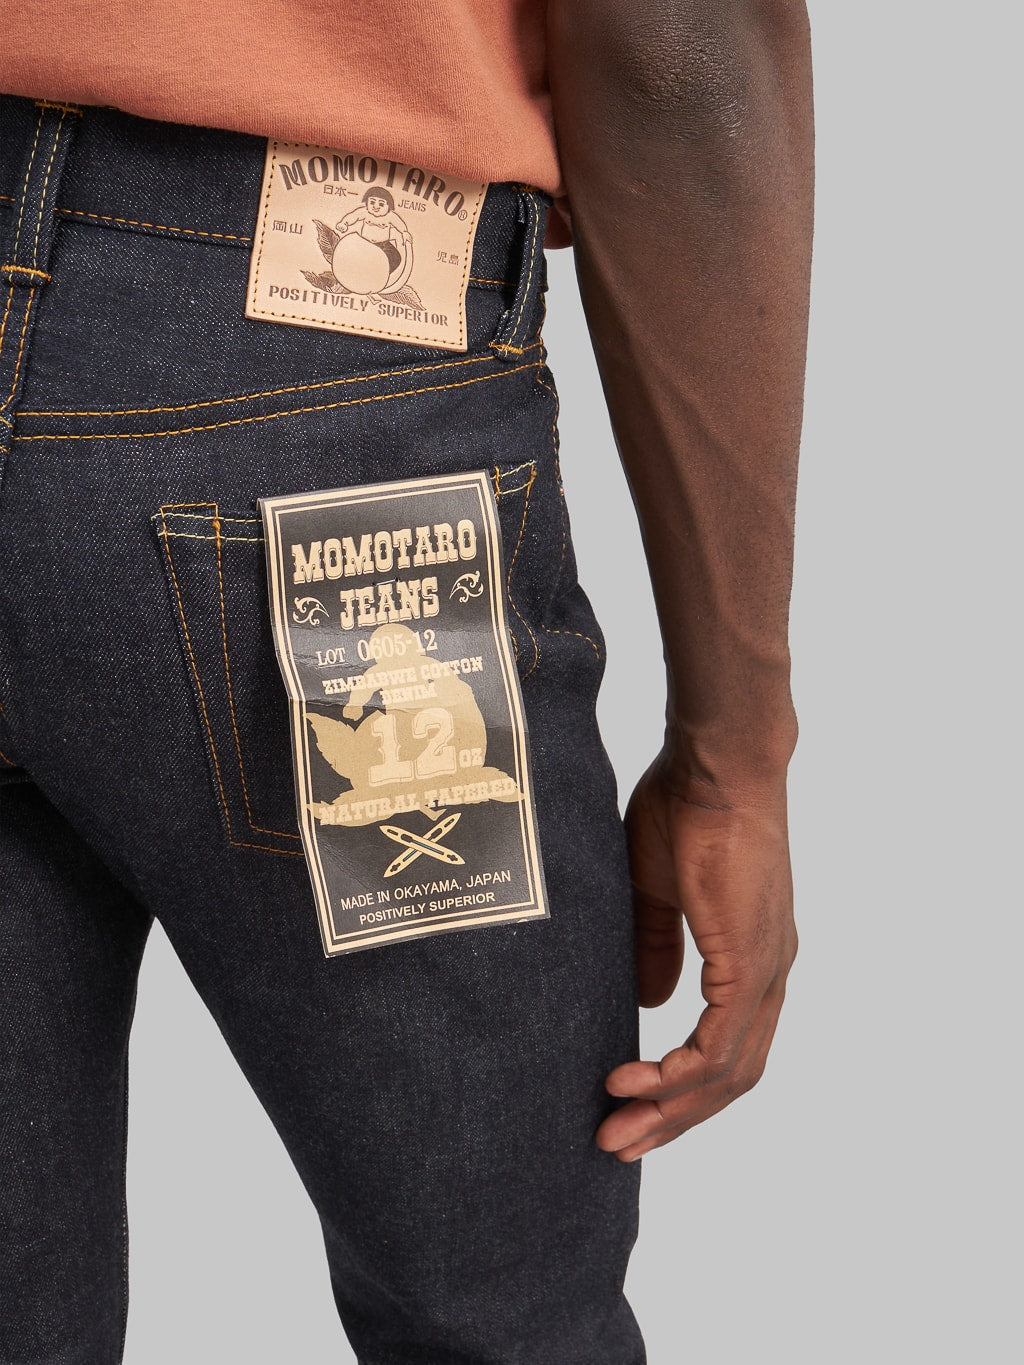 Momotaro 0605 12oz Natural Tapered Jeans pocket flasher